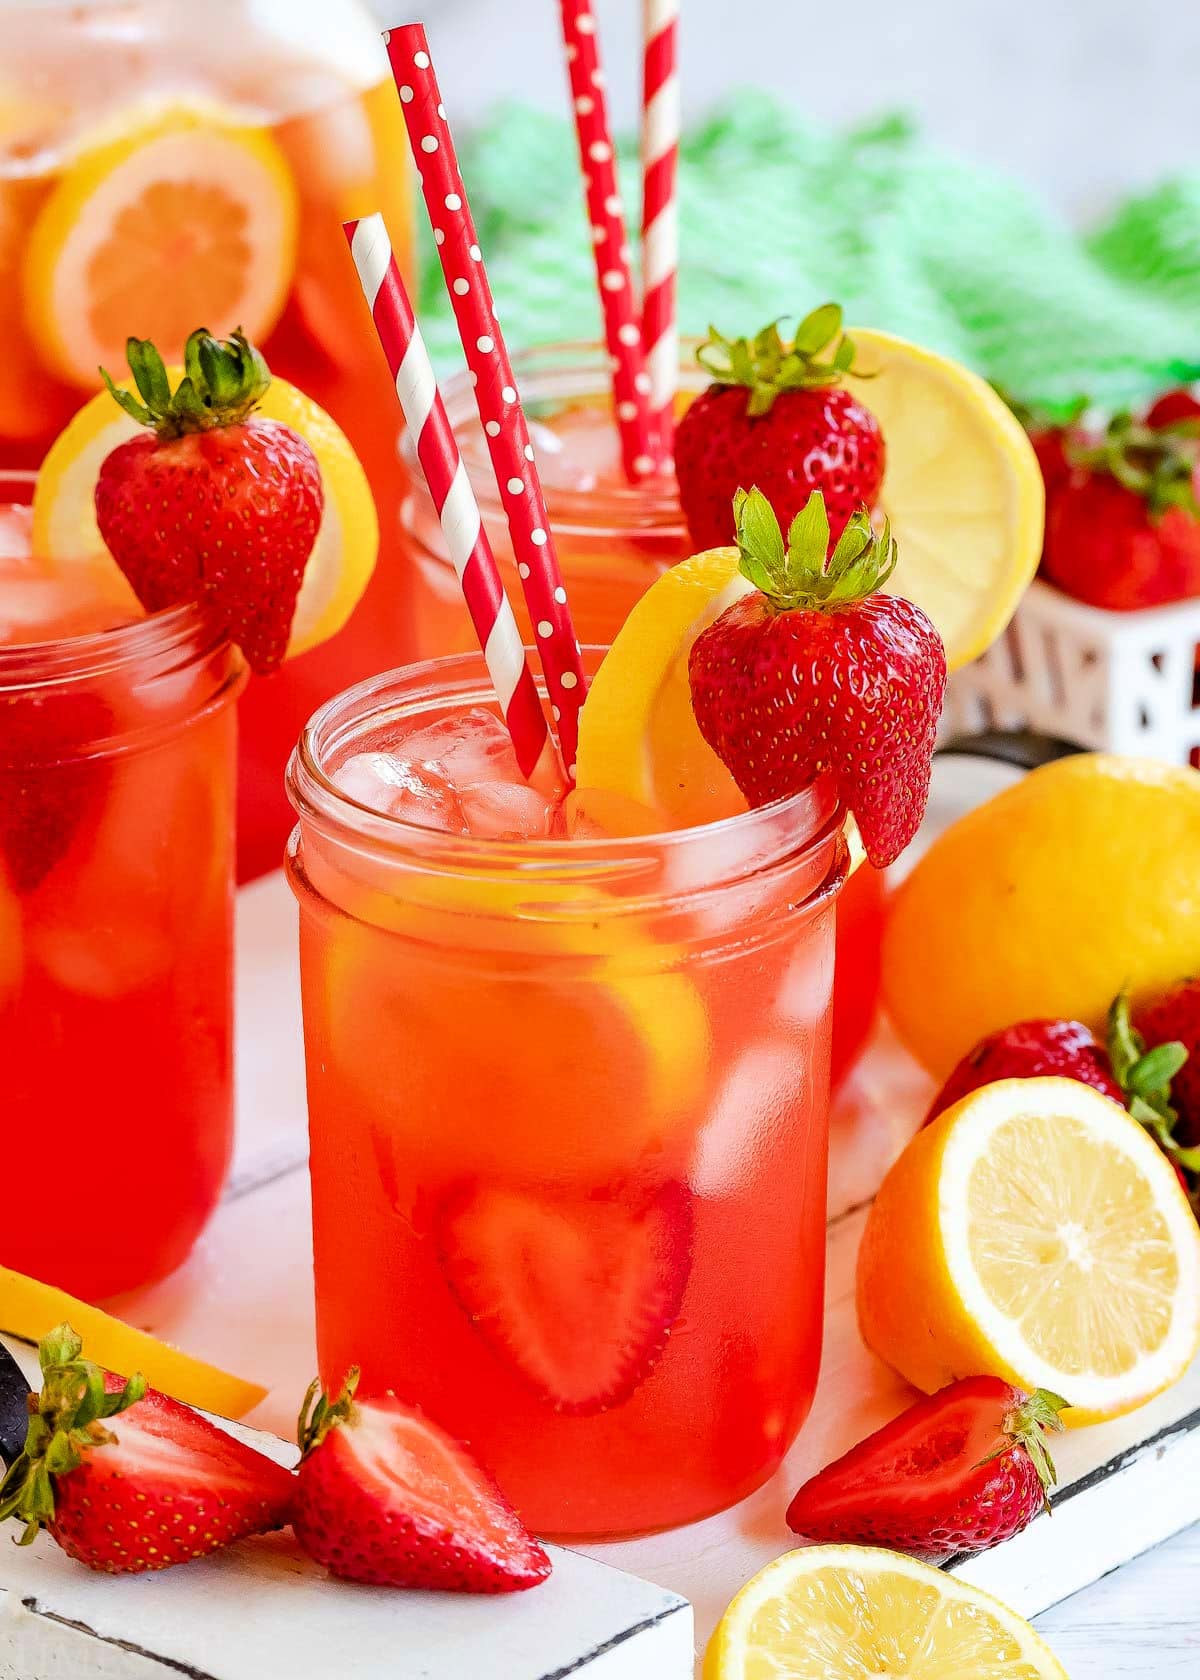 https://www.momontimeout.com/wp-content/uploads/2021/07/strawberry-lemonade-best-recipe.jpeg